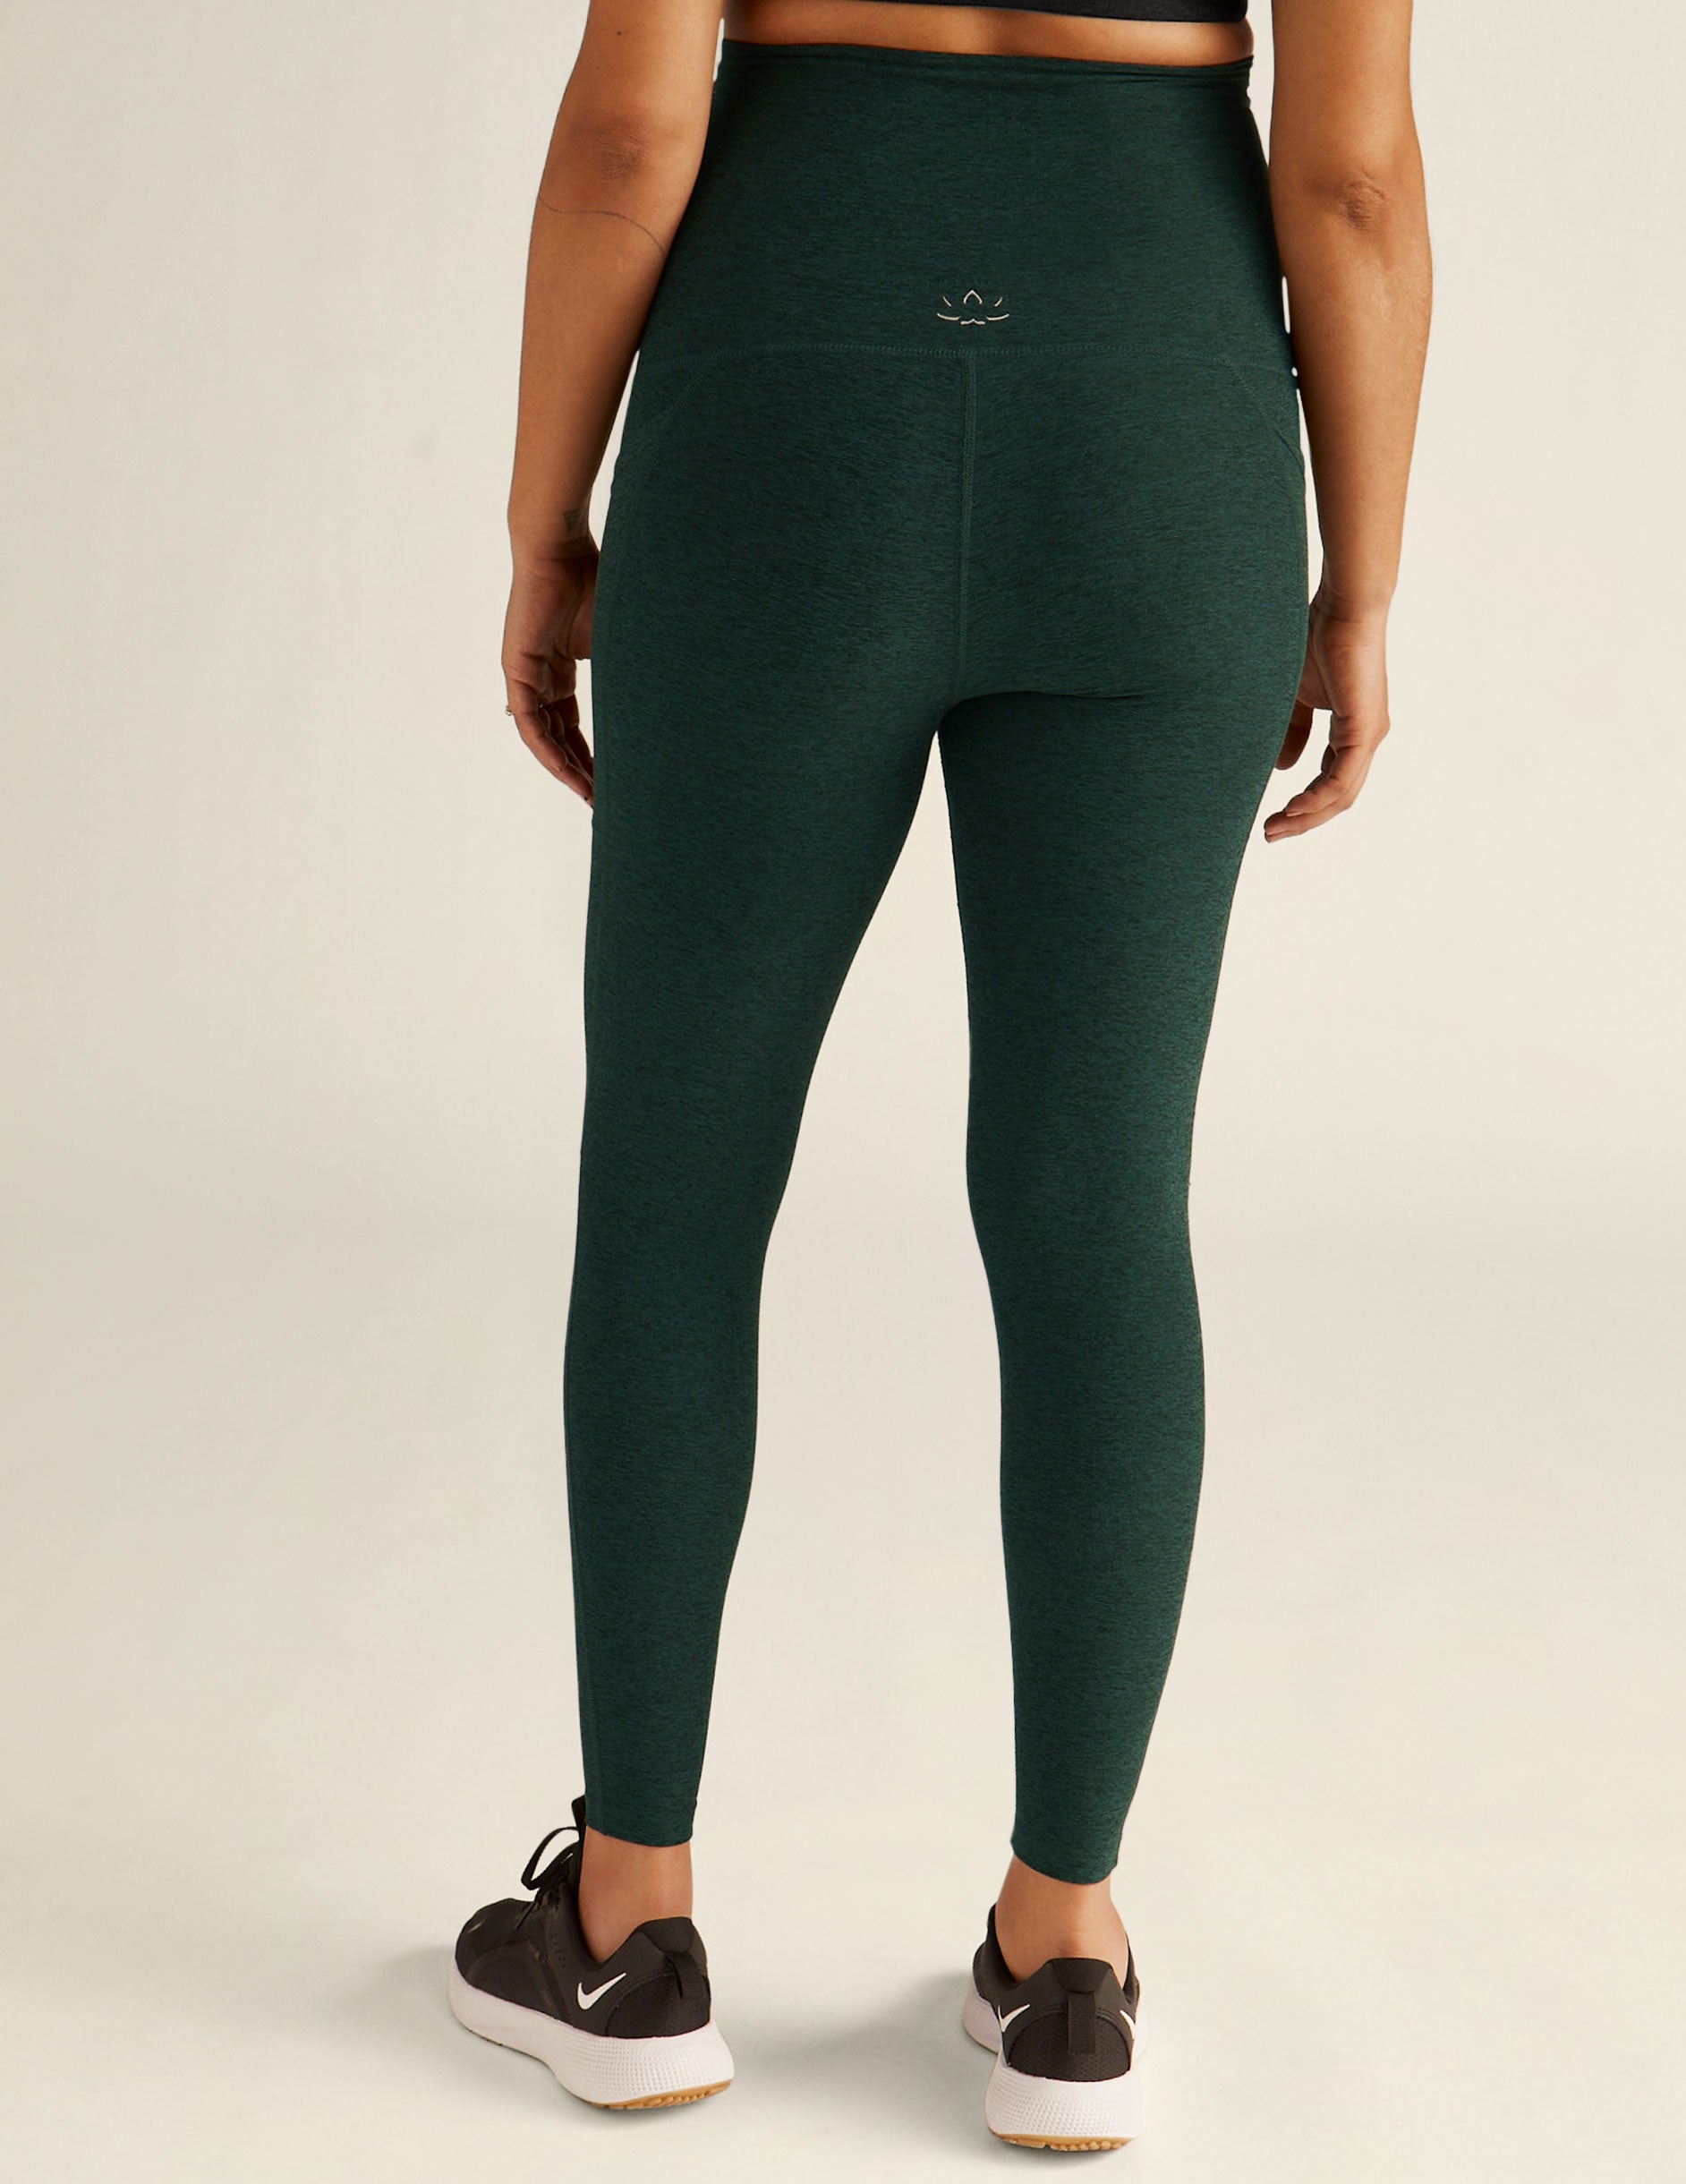 green midi maternity leggings with pockets. 